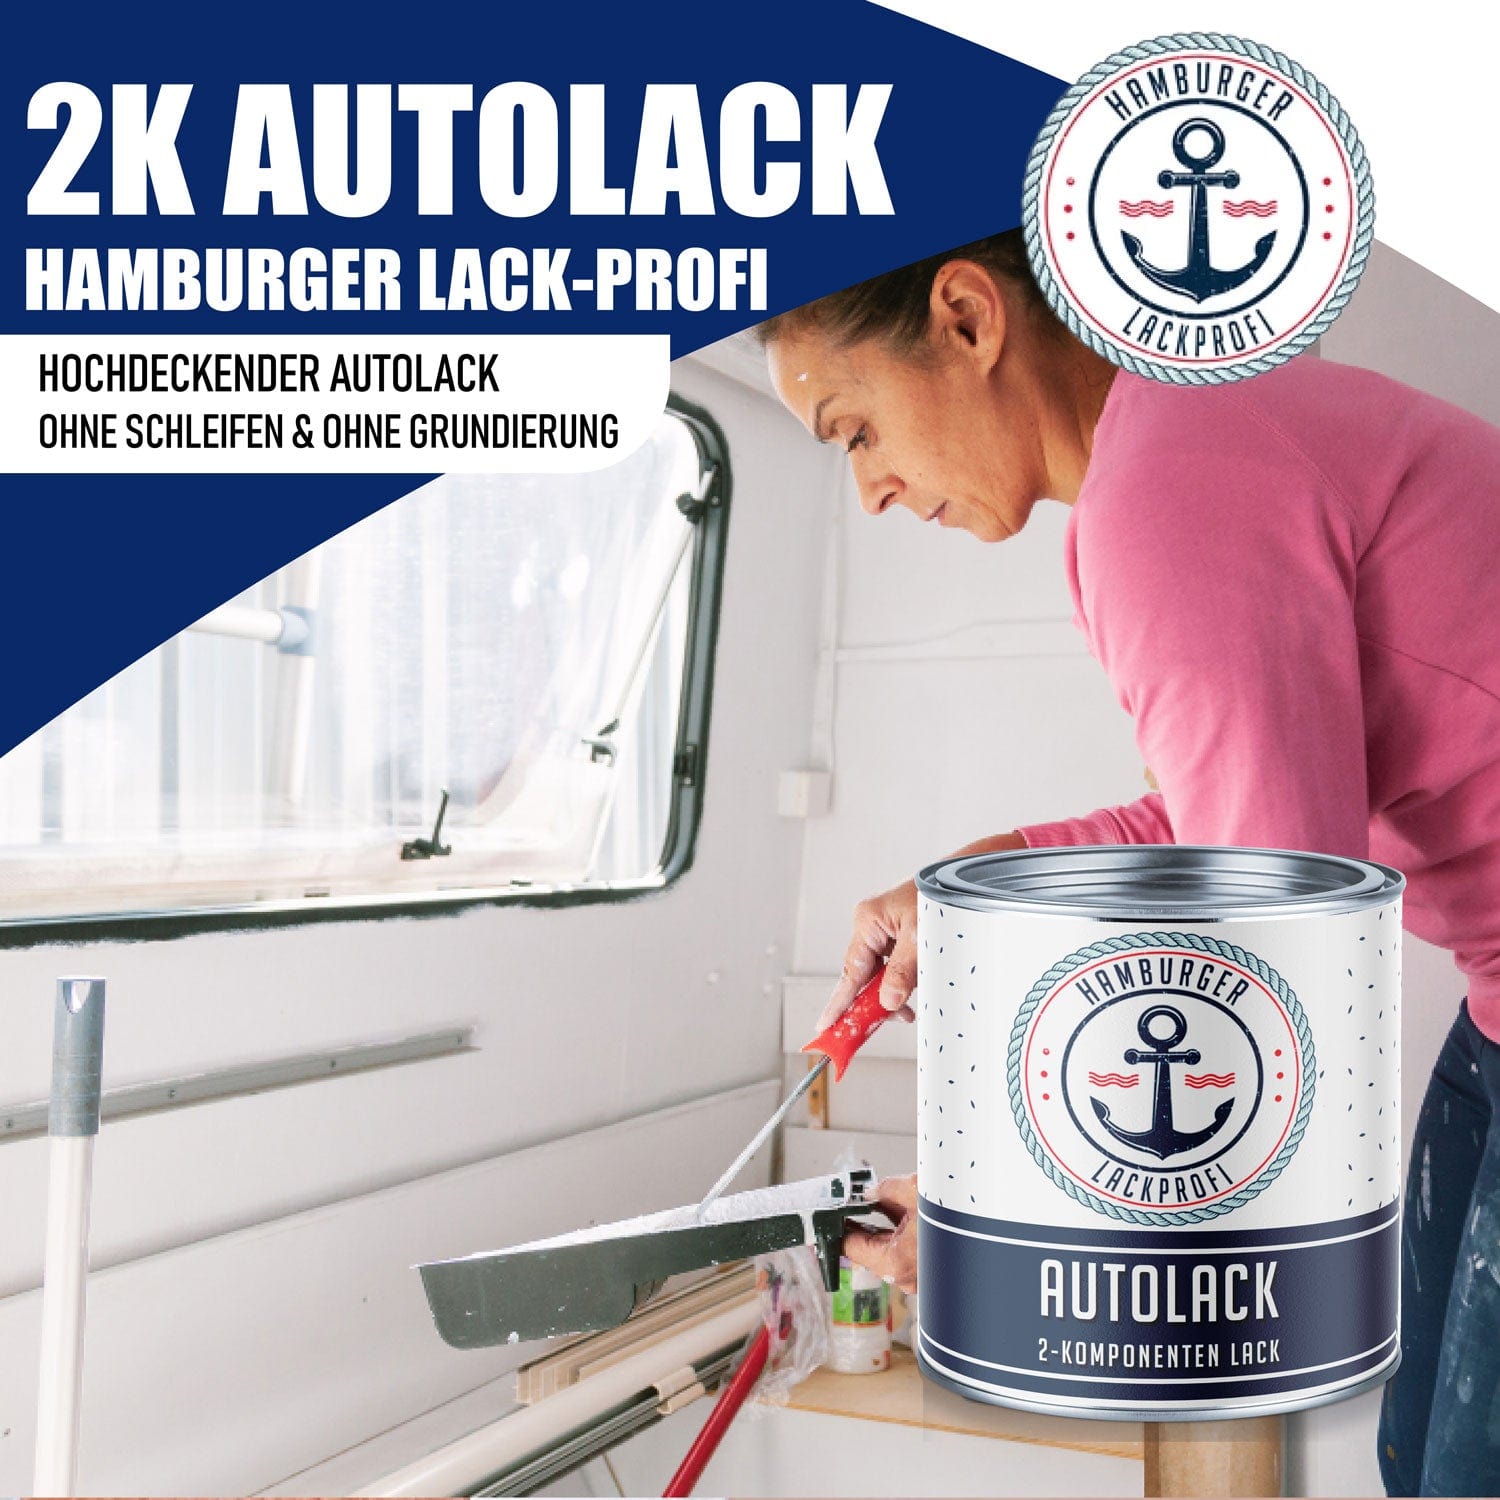 Hamburger Lack-Profi Lacke & Beschichtungen Hamburger Lack-Profi 2K Autolack in Verkehrsblau RAL 5017 mit Lackierset (X300) & Verdünnung (1 L) - 30% Sparangebot